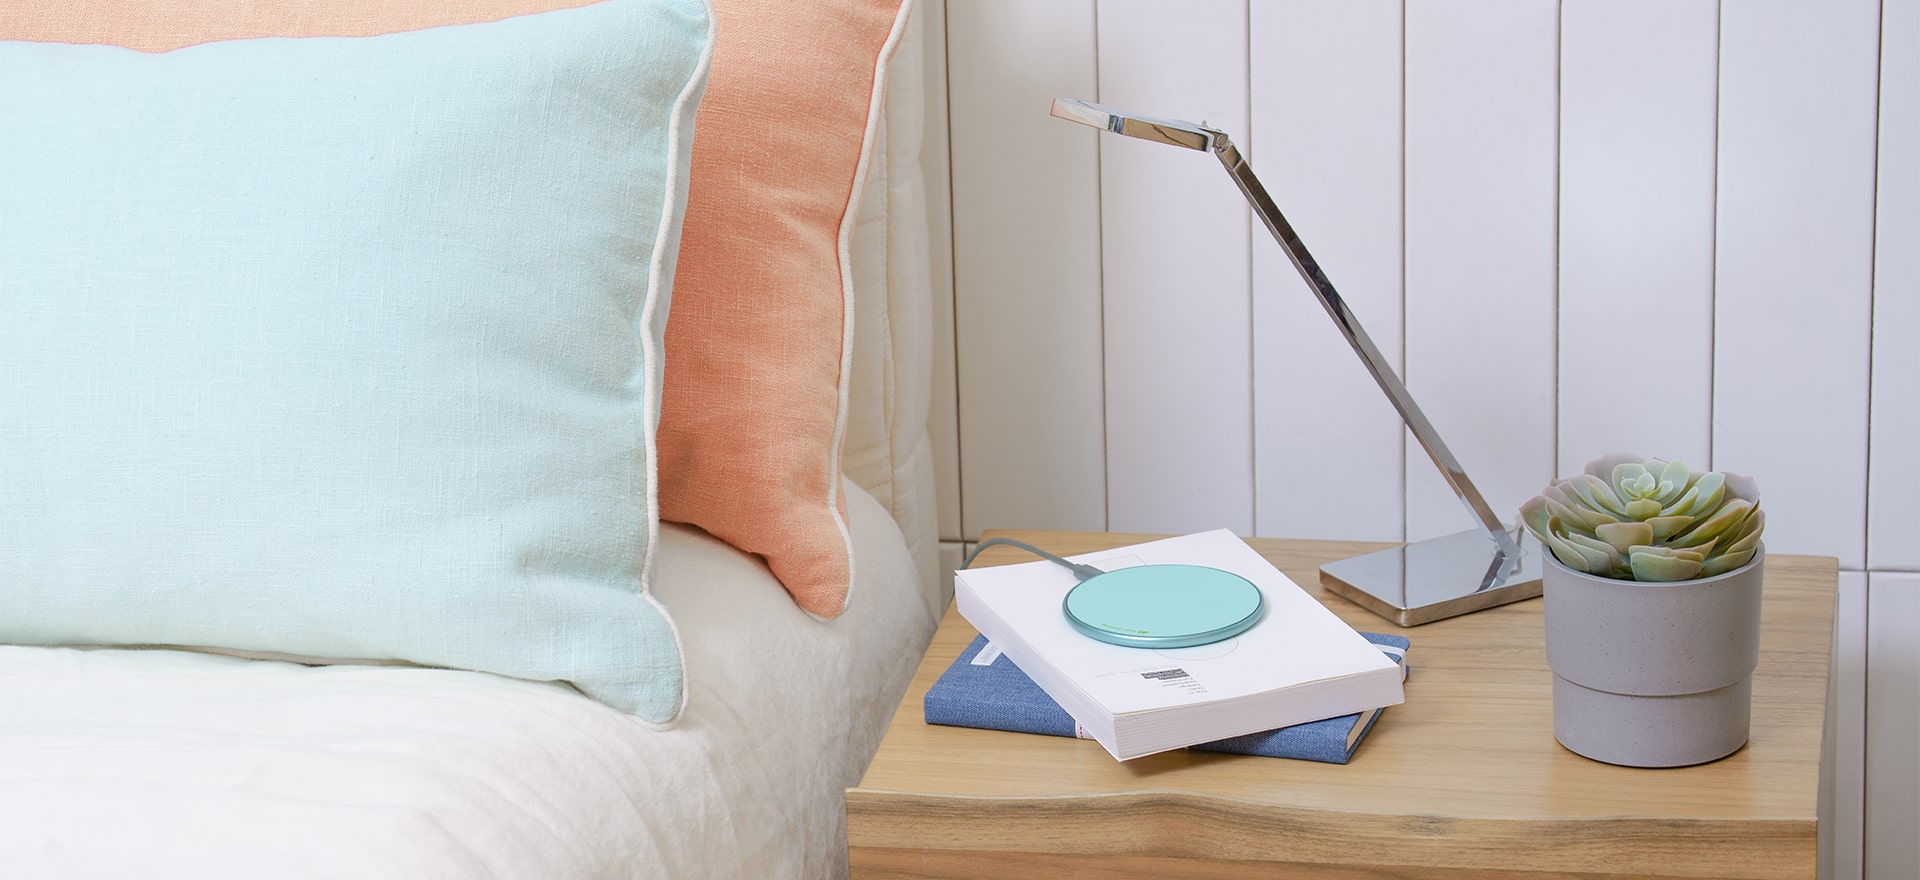 wireless charging pad in bedroom